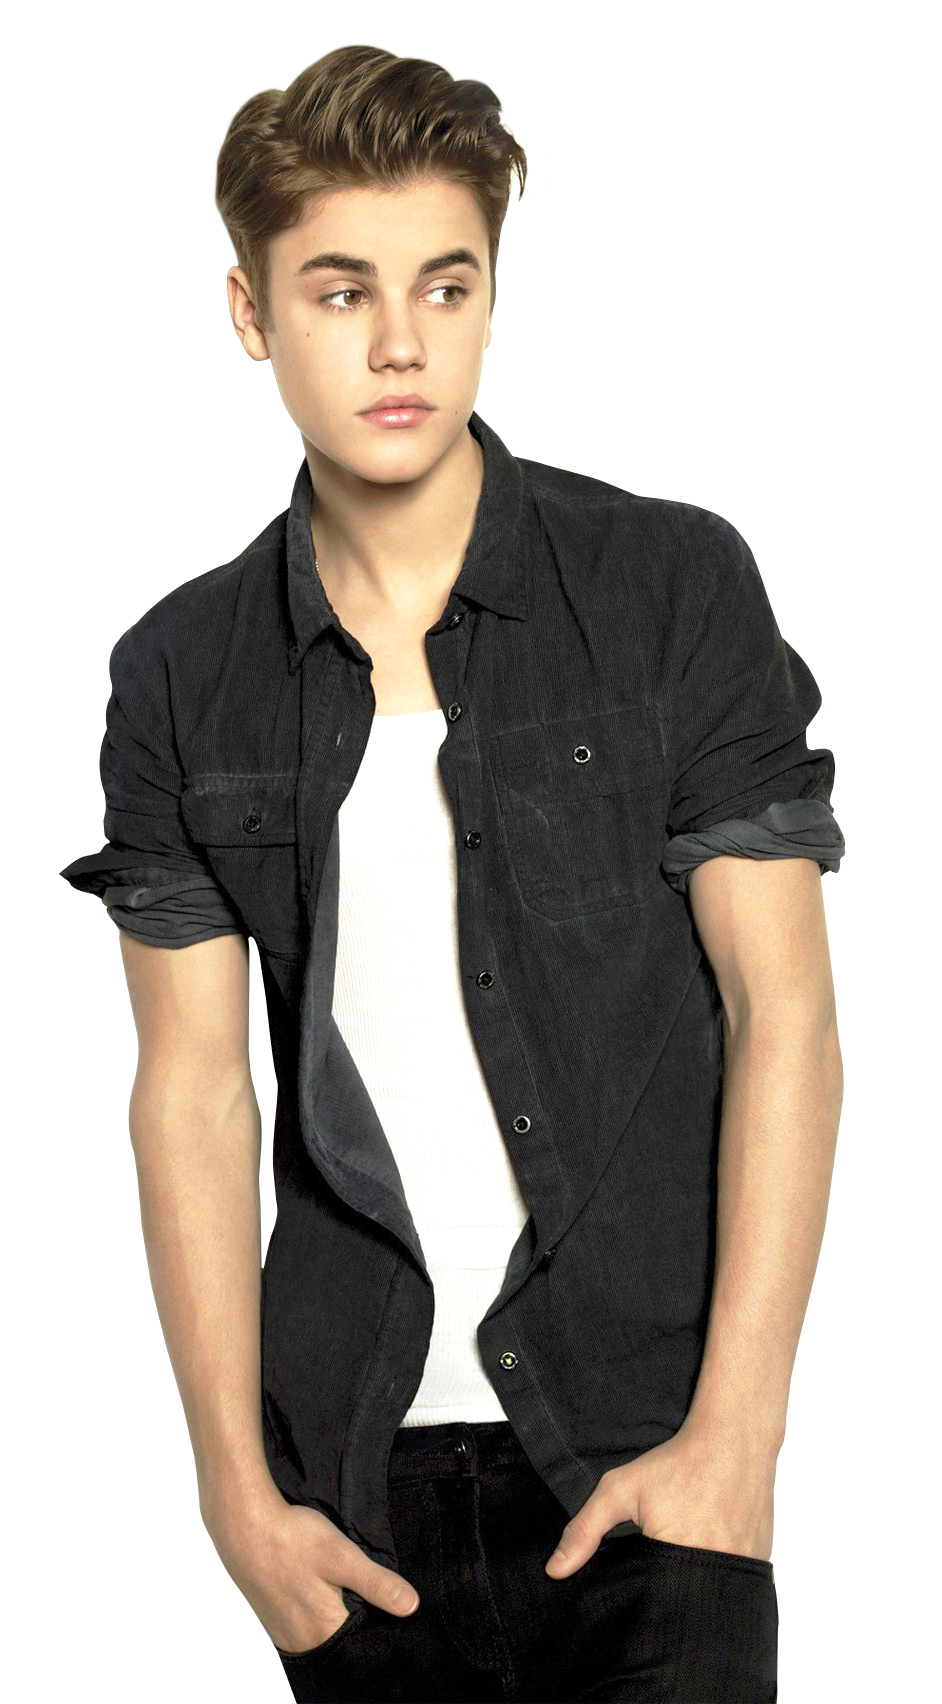 A Famous Singer Justin Bieber PNG Image.